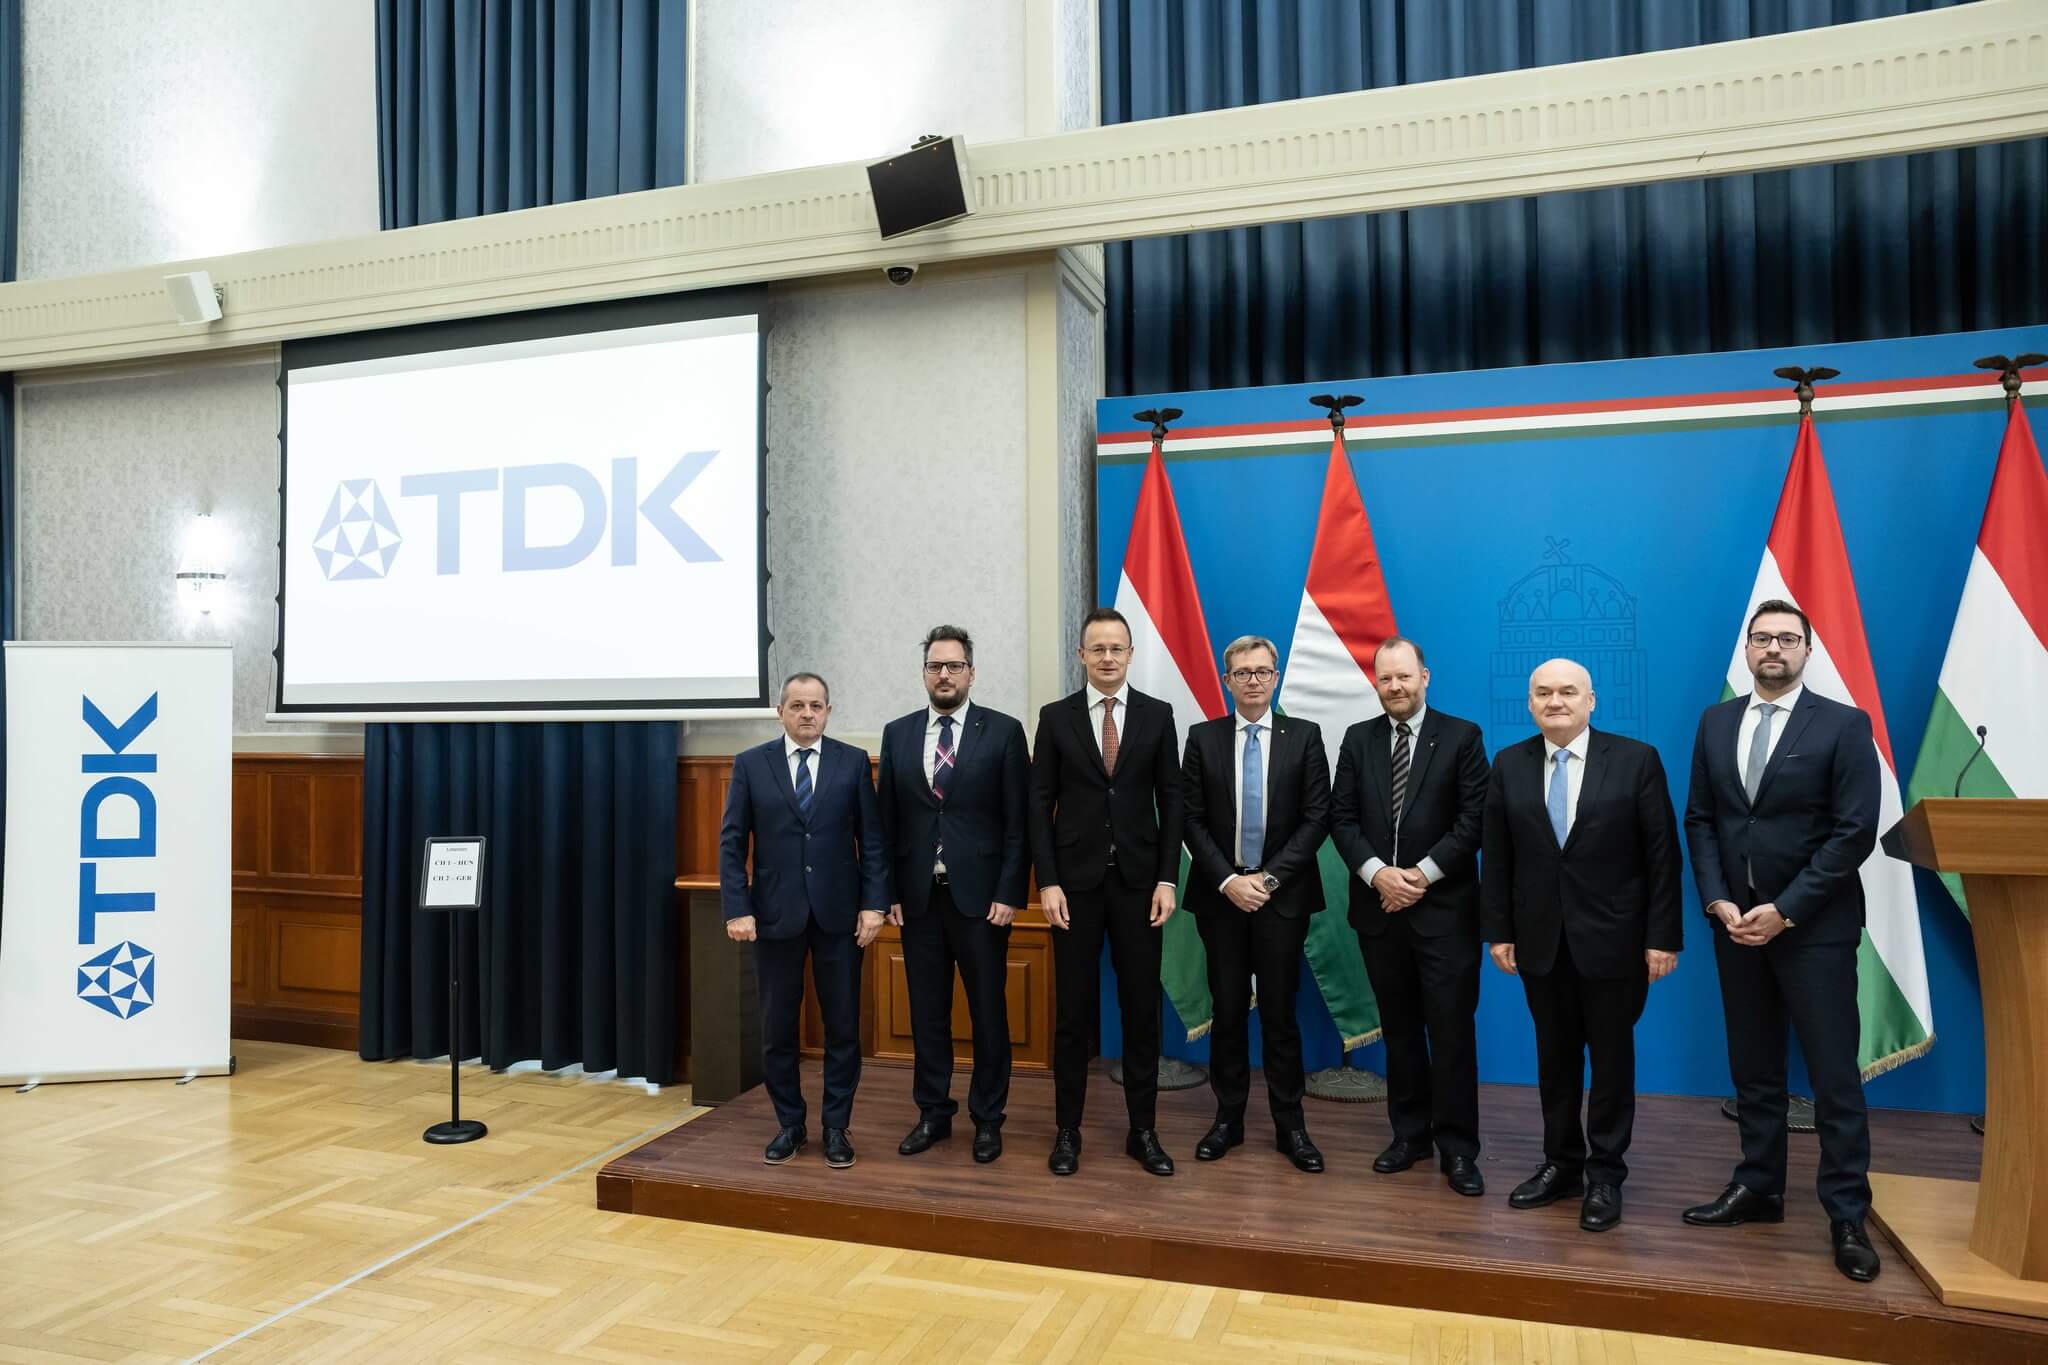 Japan's TDK Announces HUF 3.5 Billion Investment in W Hungary